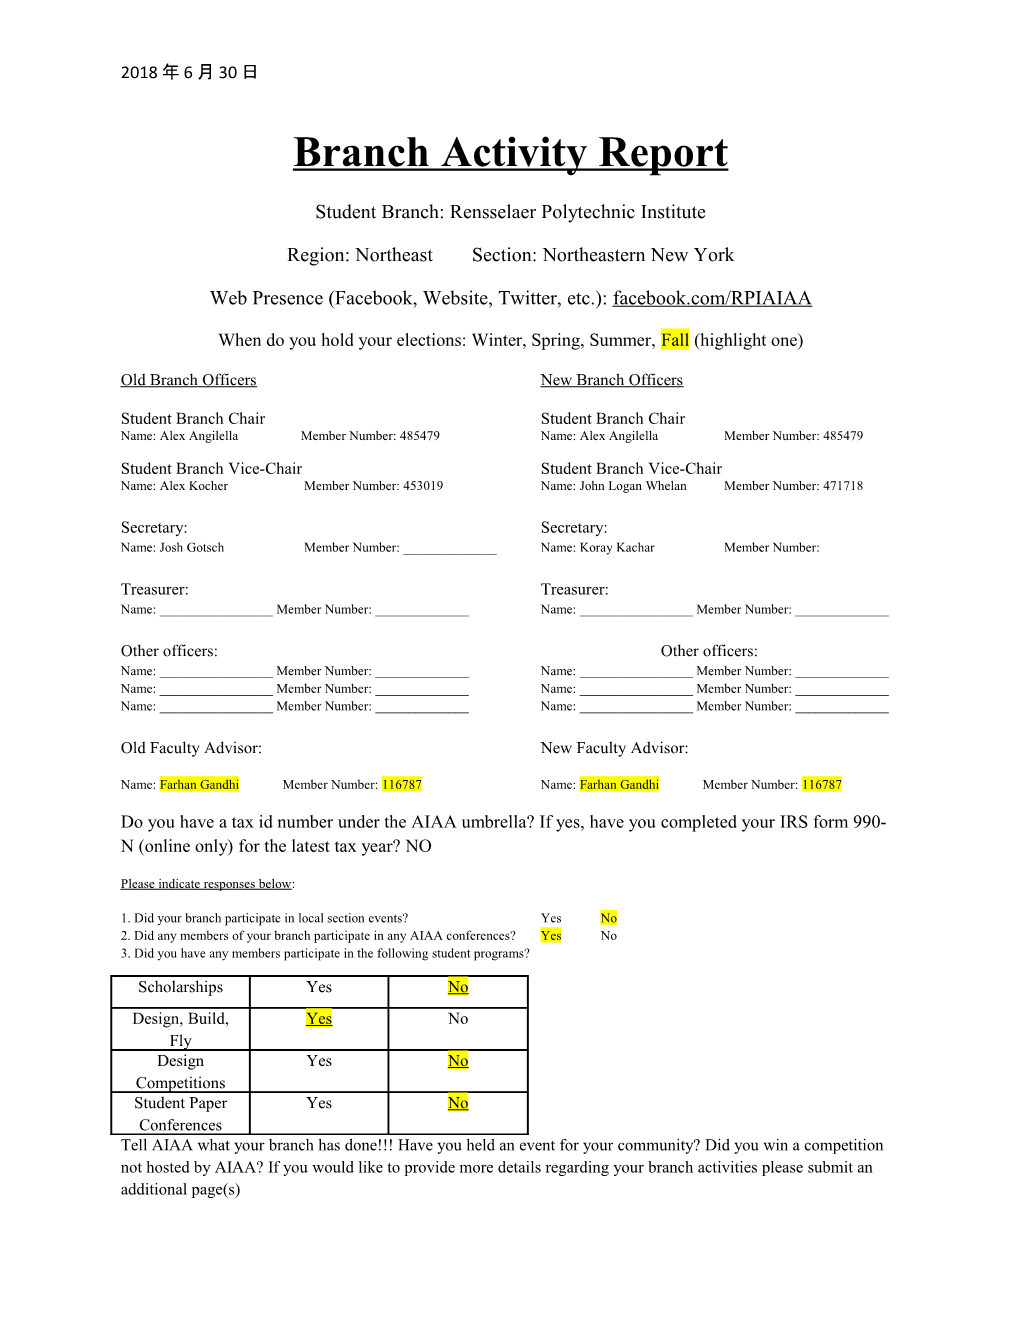 Branch Activity Report s1